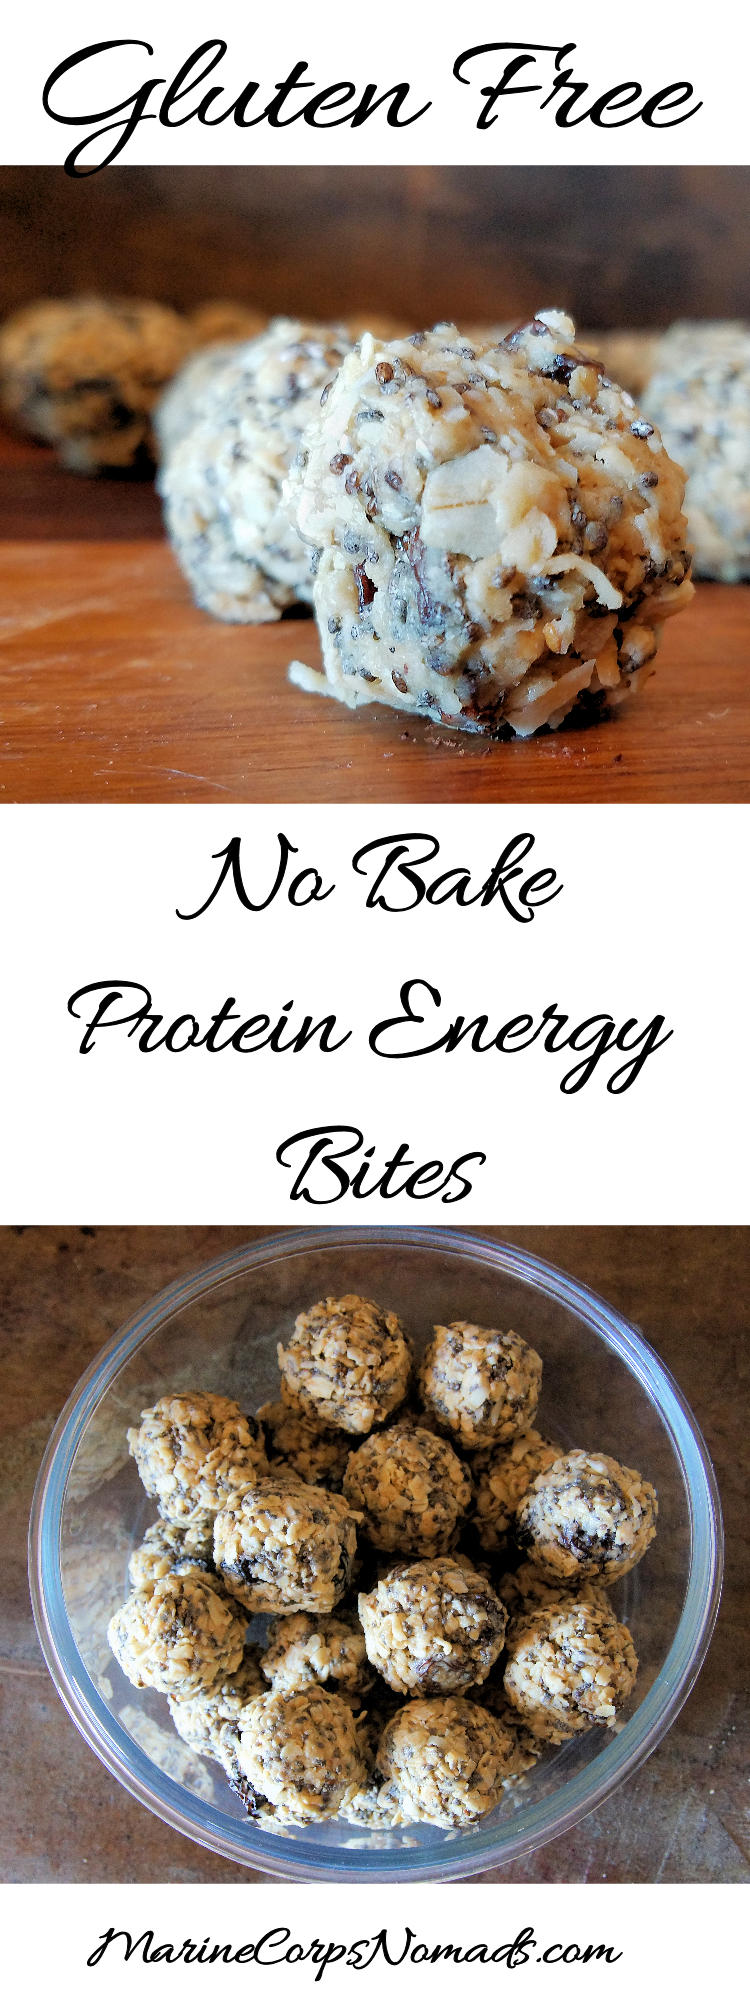 Gluten Free No Bake Protein Energy Bites | Trail Snacks | Marine Corps Nomads